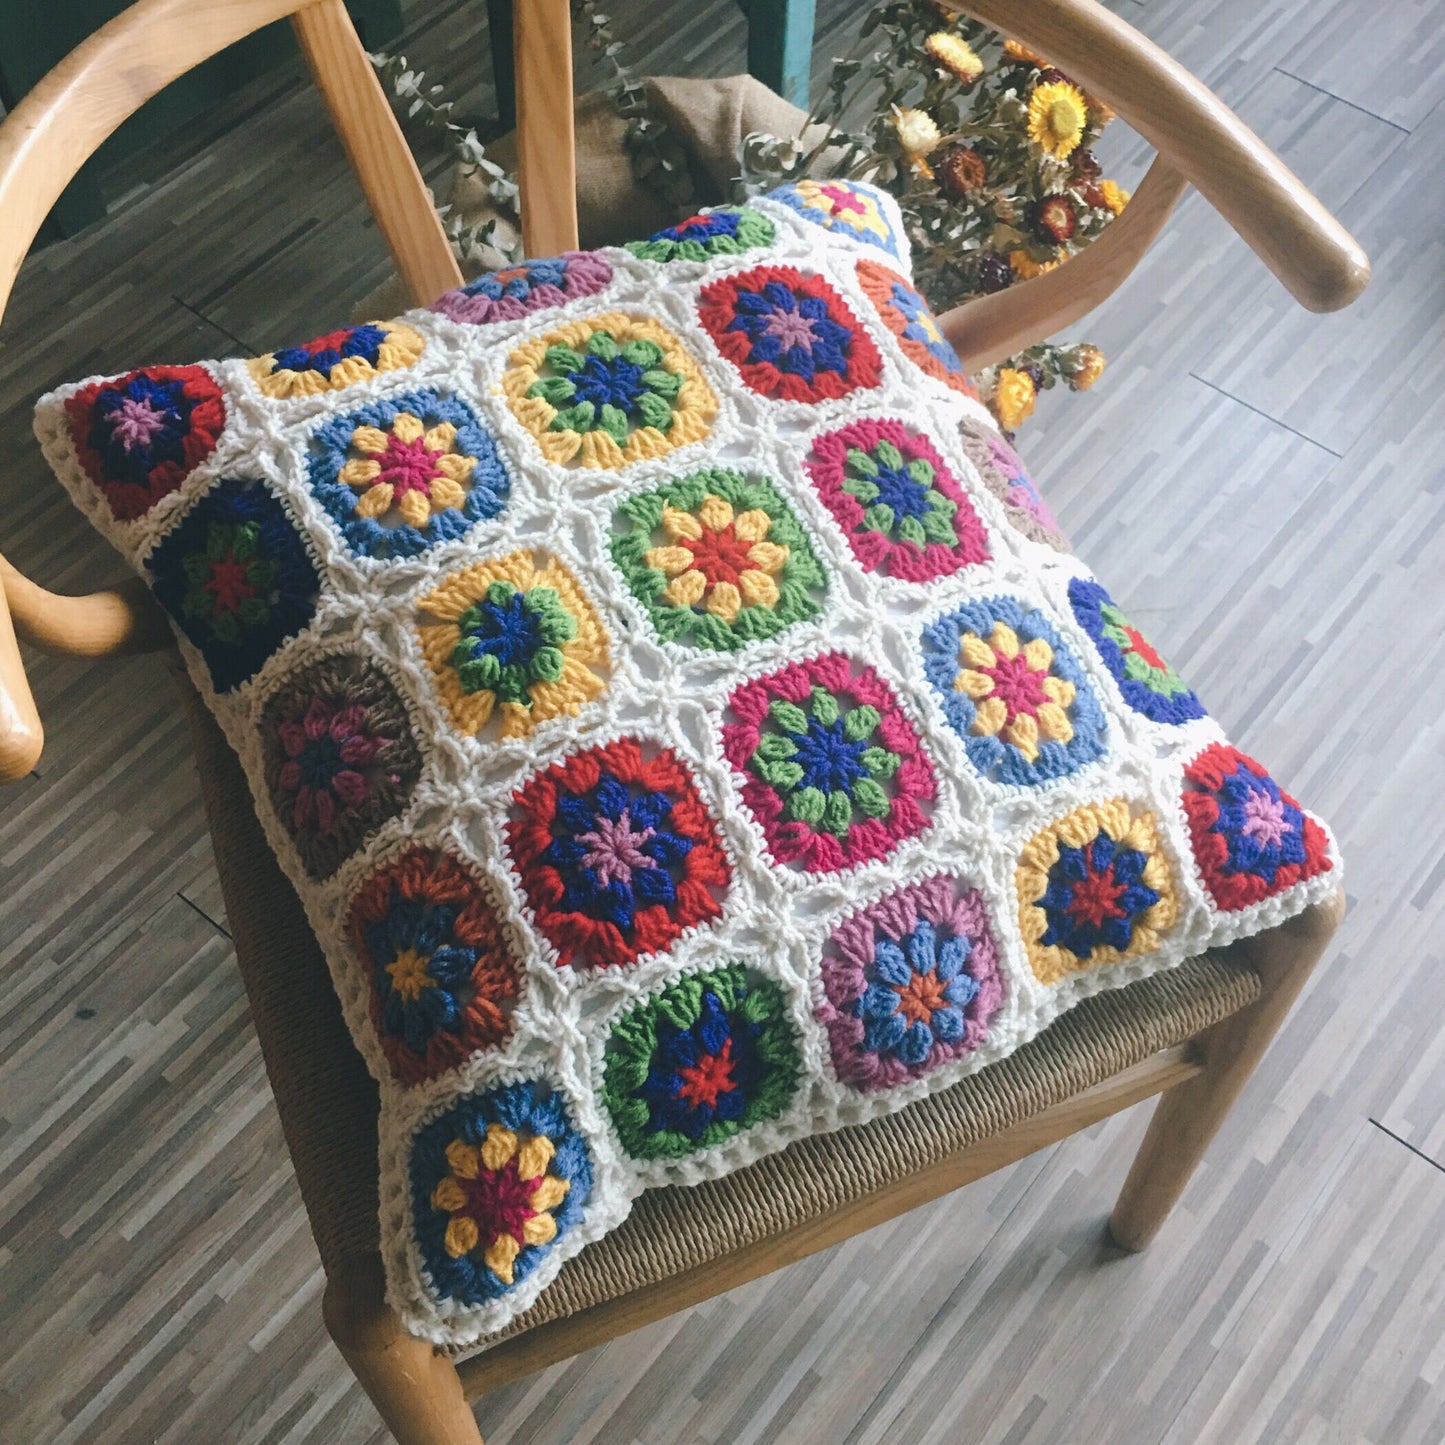 Handmade hand-crocheted flower Nordic country hug pillow